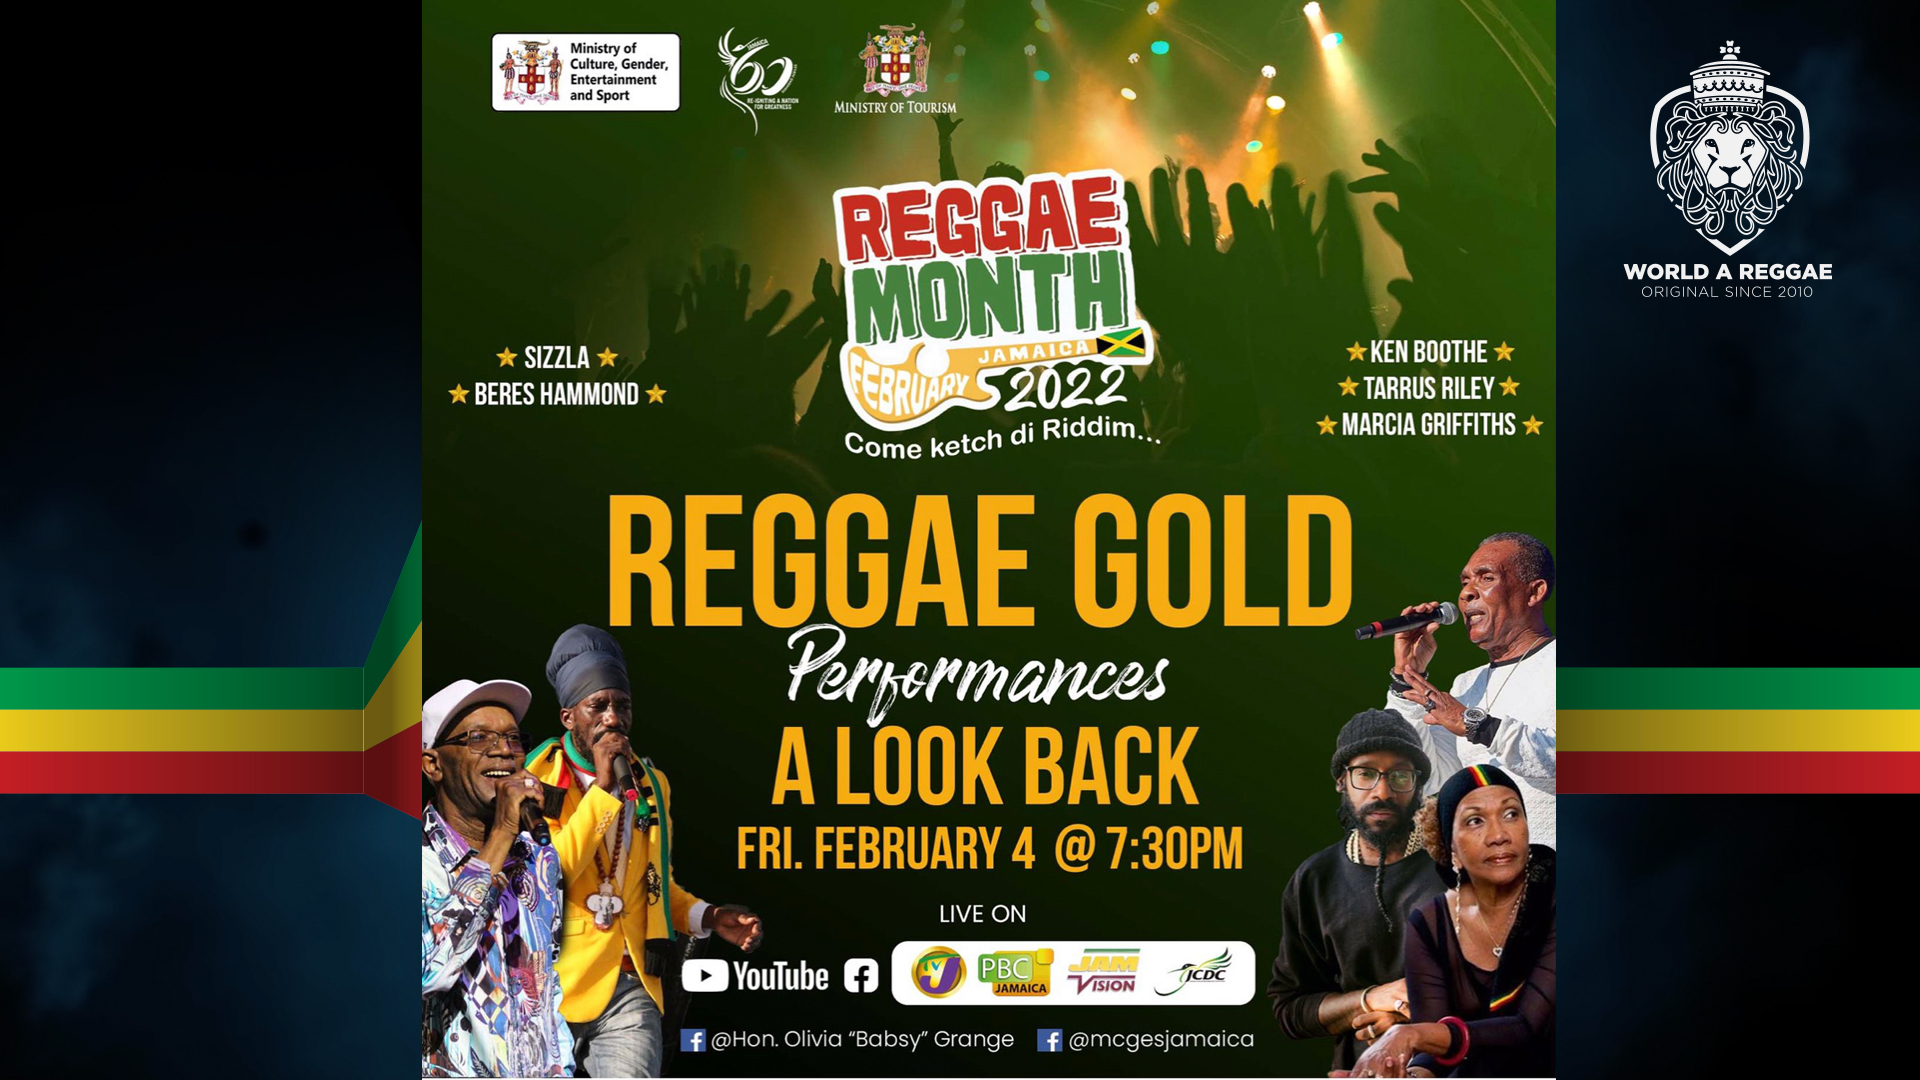 Reggae Month 2022 February 4, Reggae Gold Performances A Look Back